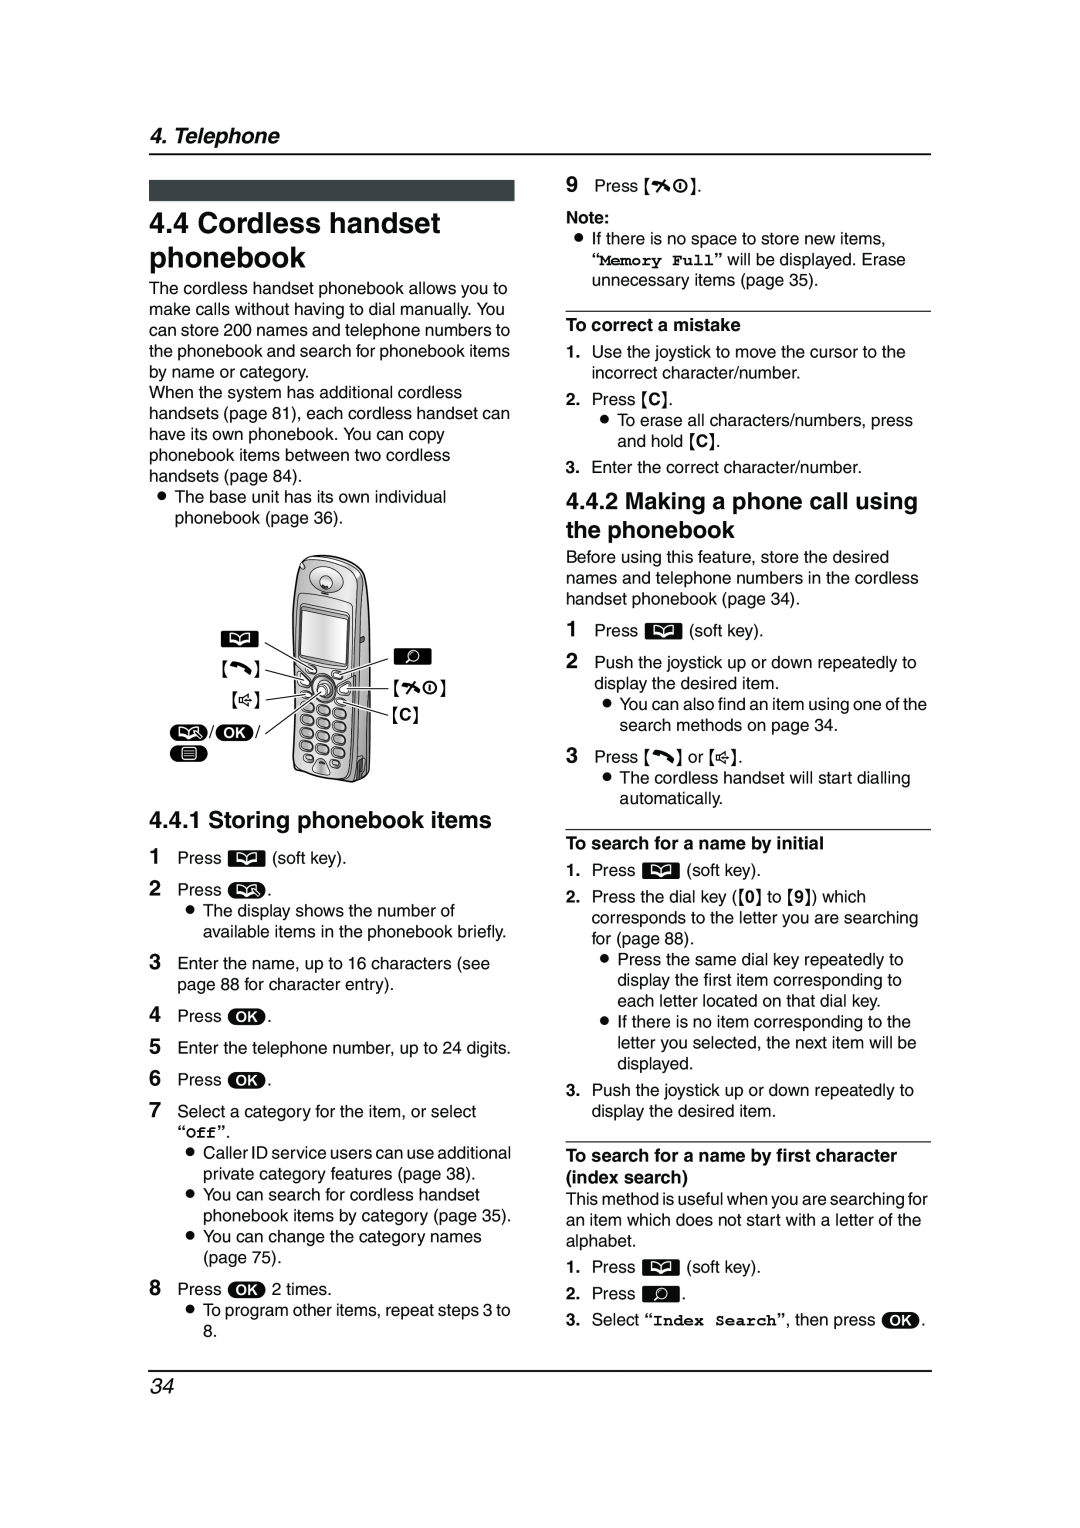 Panasonic KX-FC241AL manual Cordless handset phonebook, Making a phone call using the phonebook, Storing phonebook items 